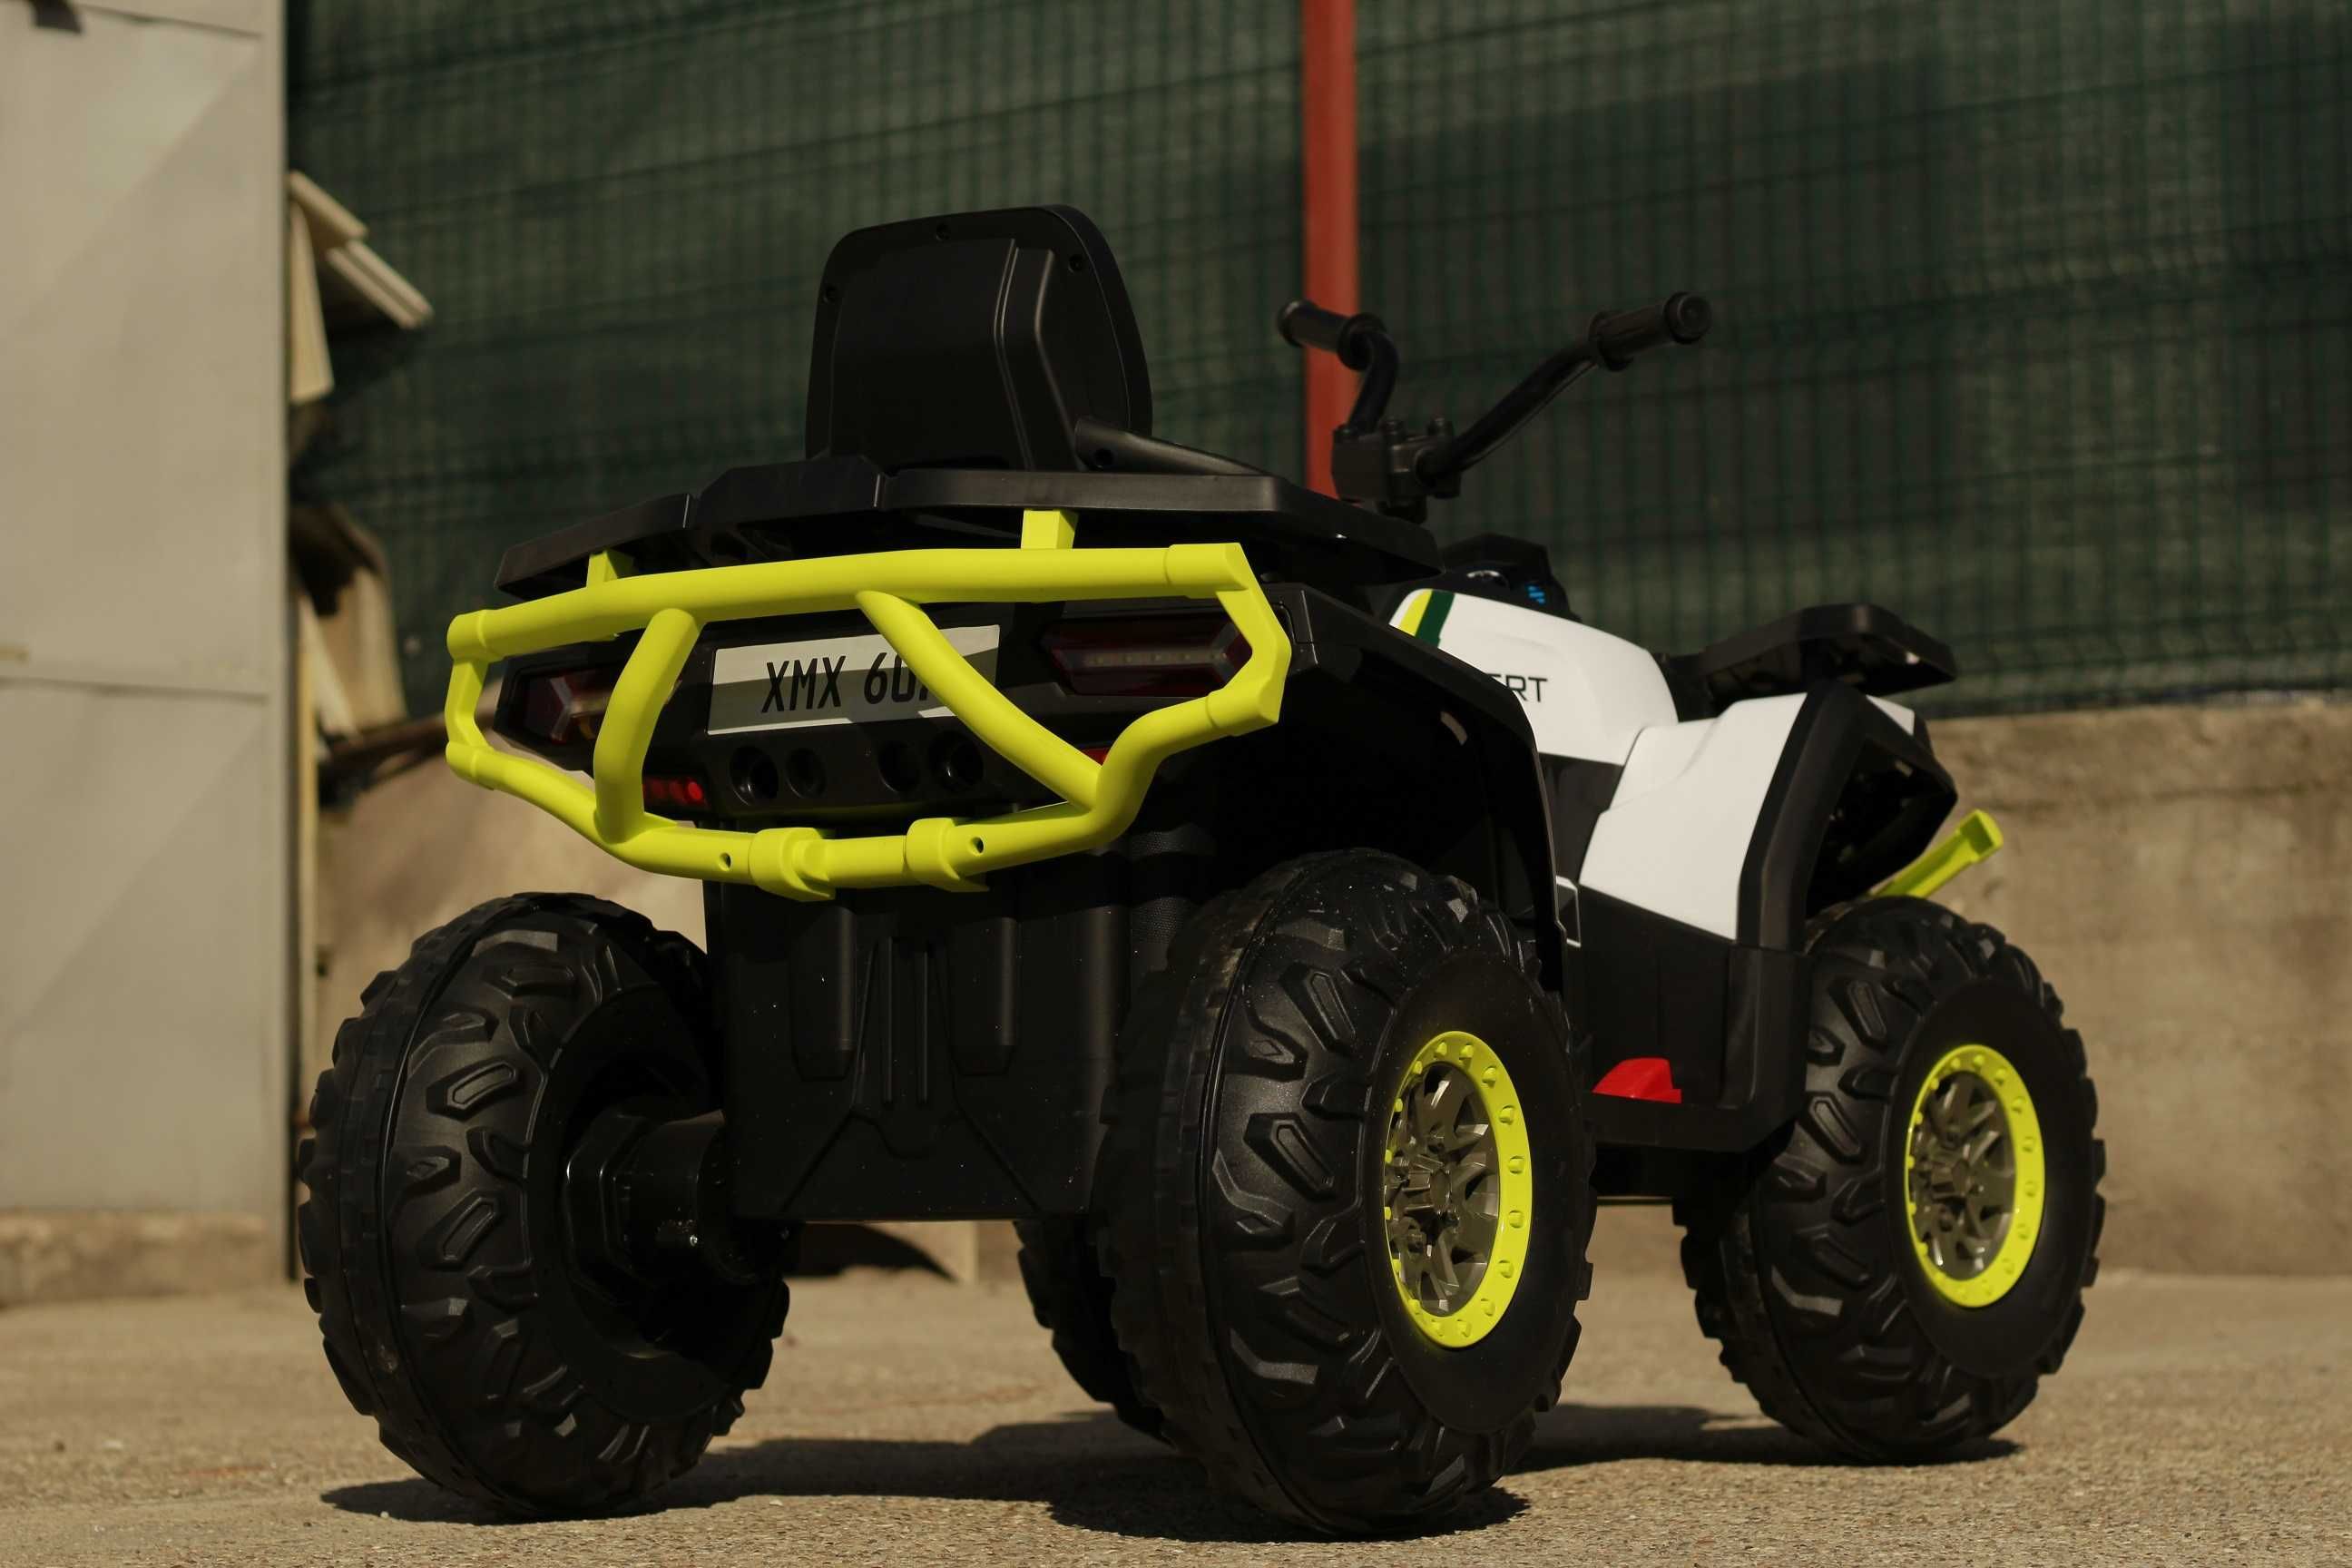 ATV electric pentru copii XMX607 2x45W 12V cu Scaun tapitat #White